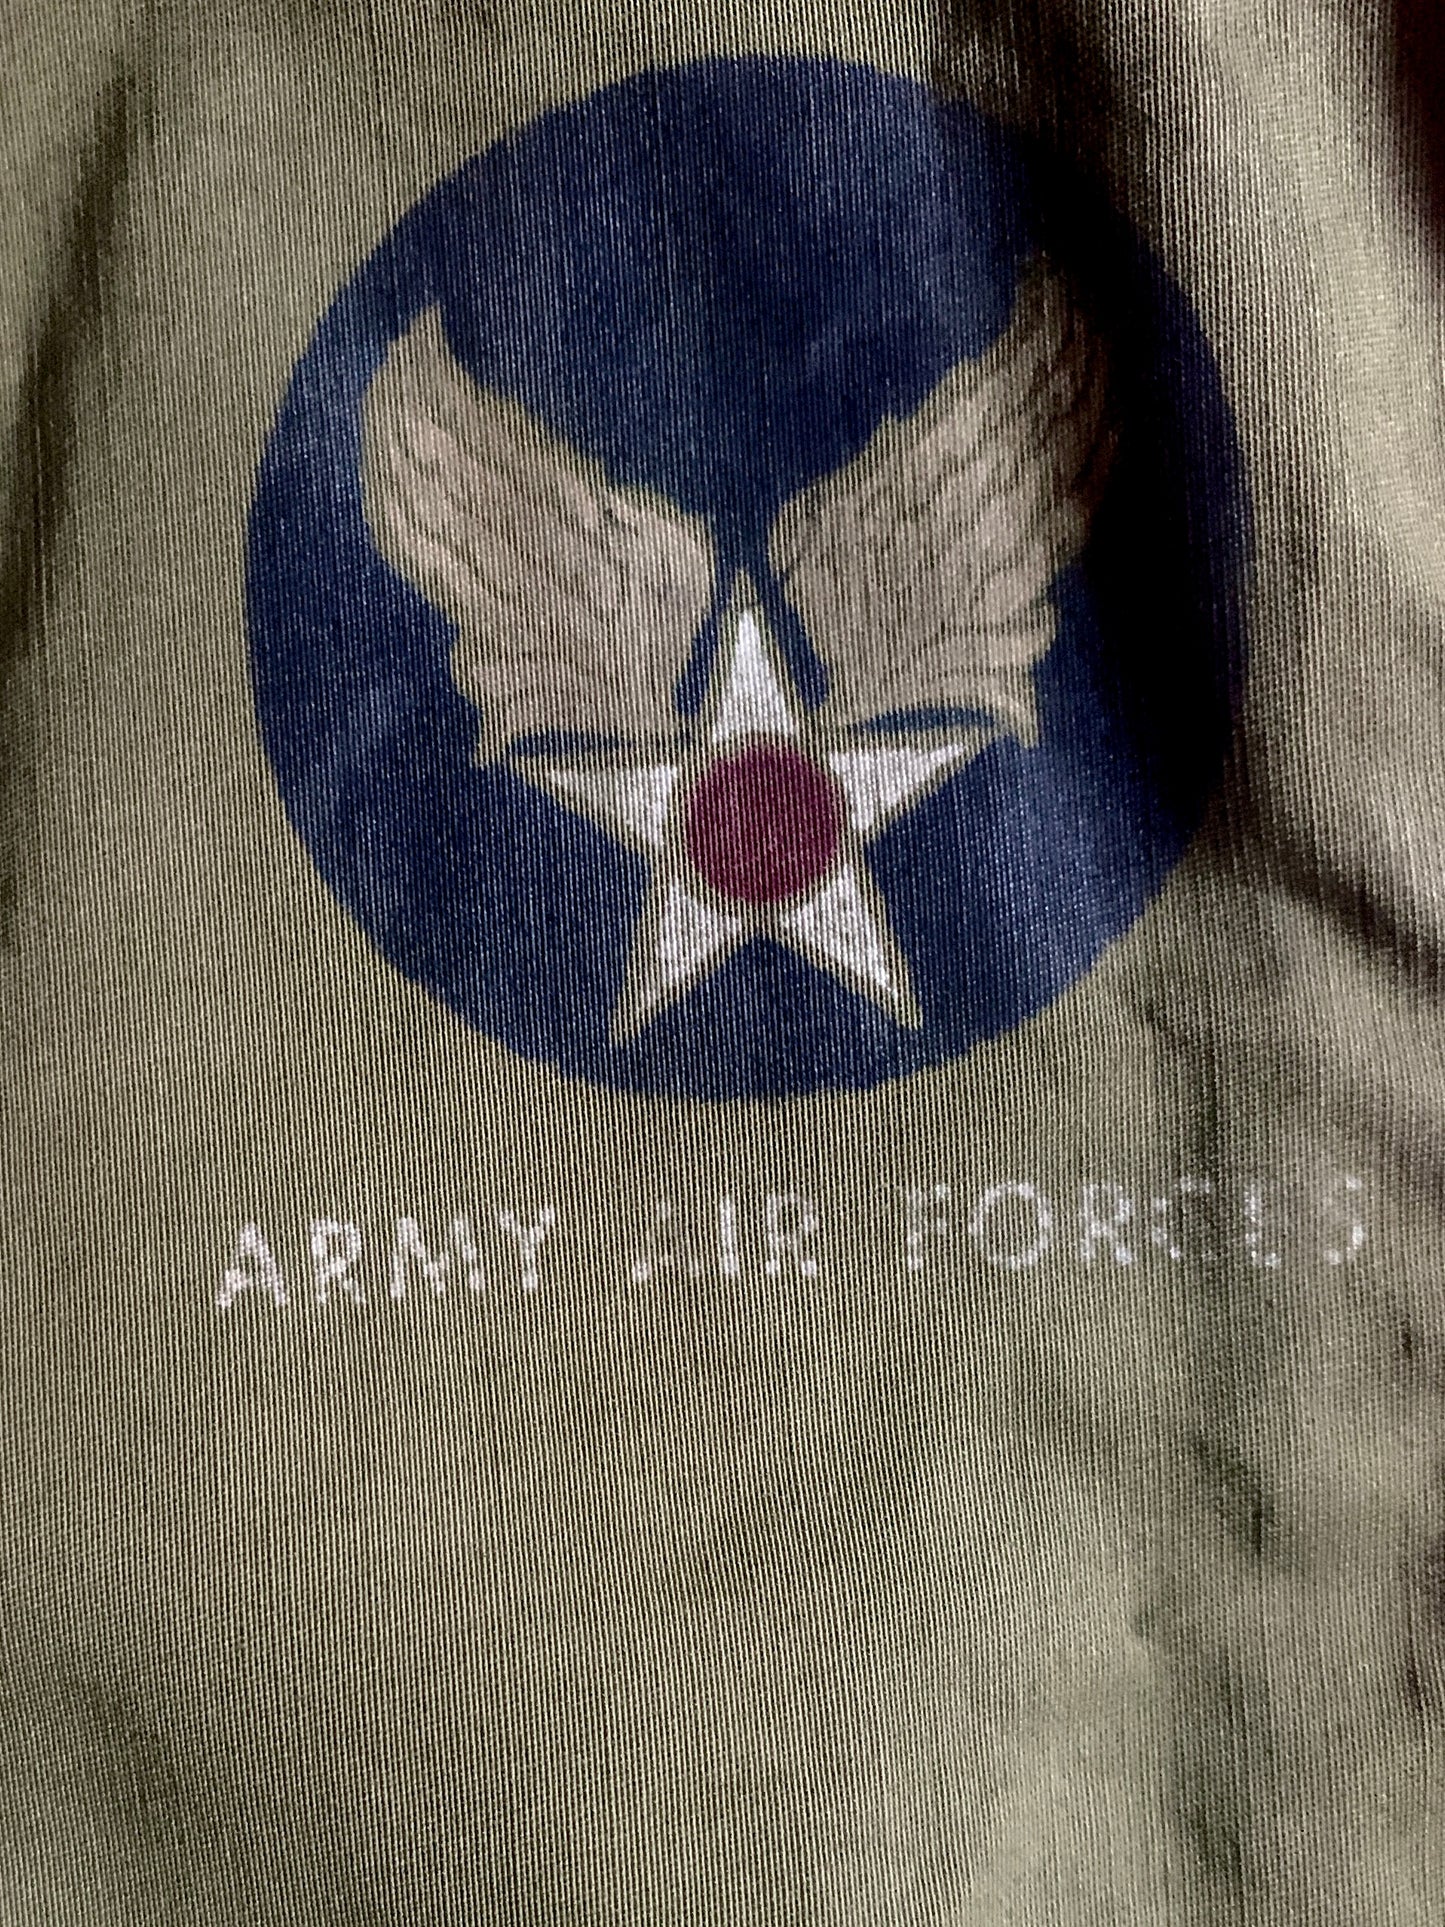 USAF Type C-1 Emergency Sustenance Vest